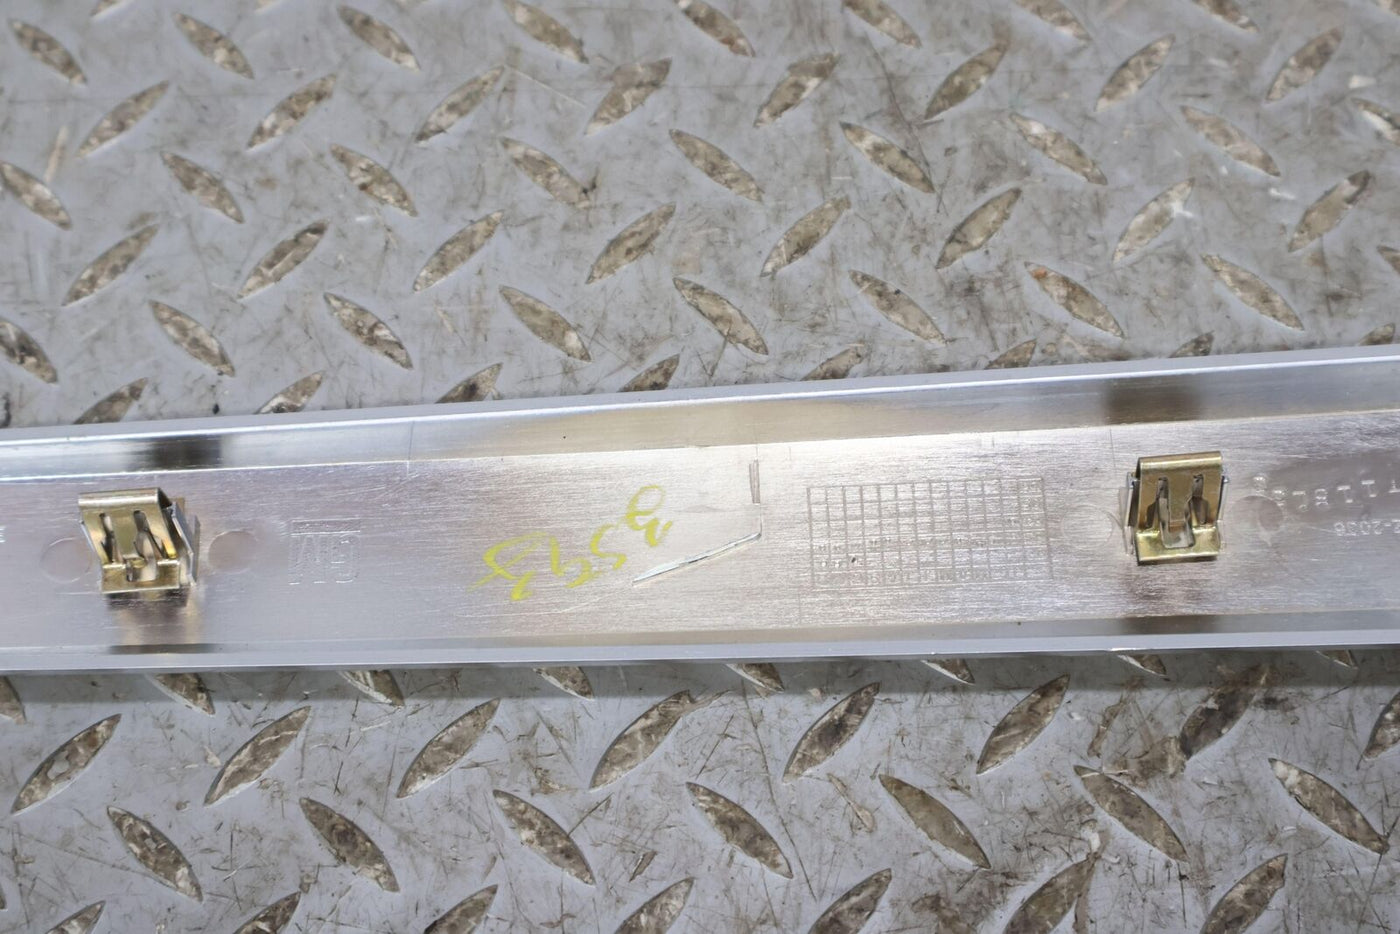 03-06 Chevy SSR Dash Trim Set (Silver) 2 Pieces OEM 15783139